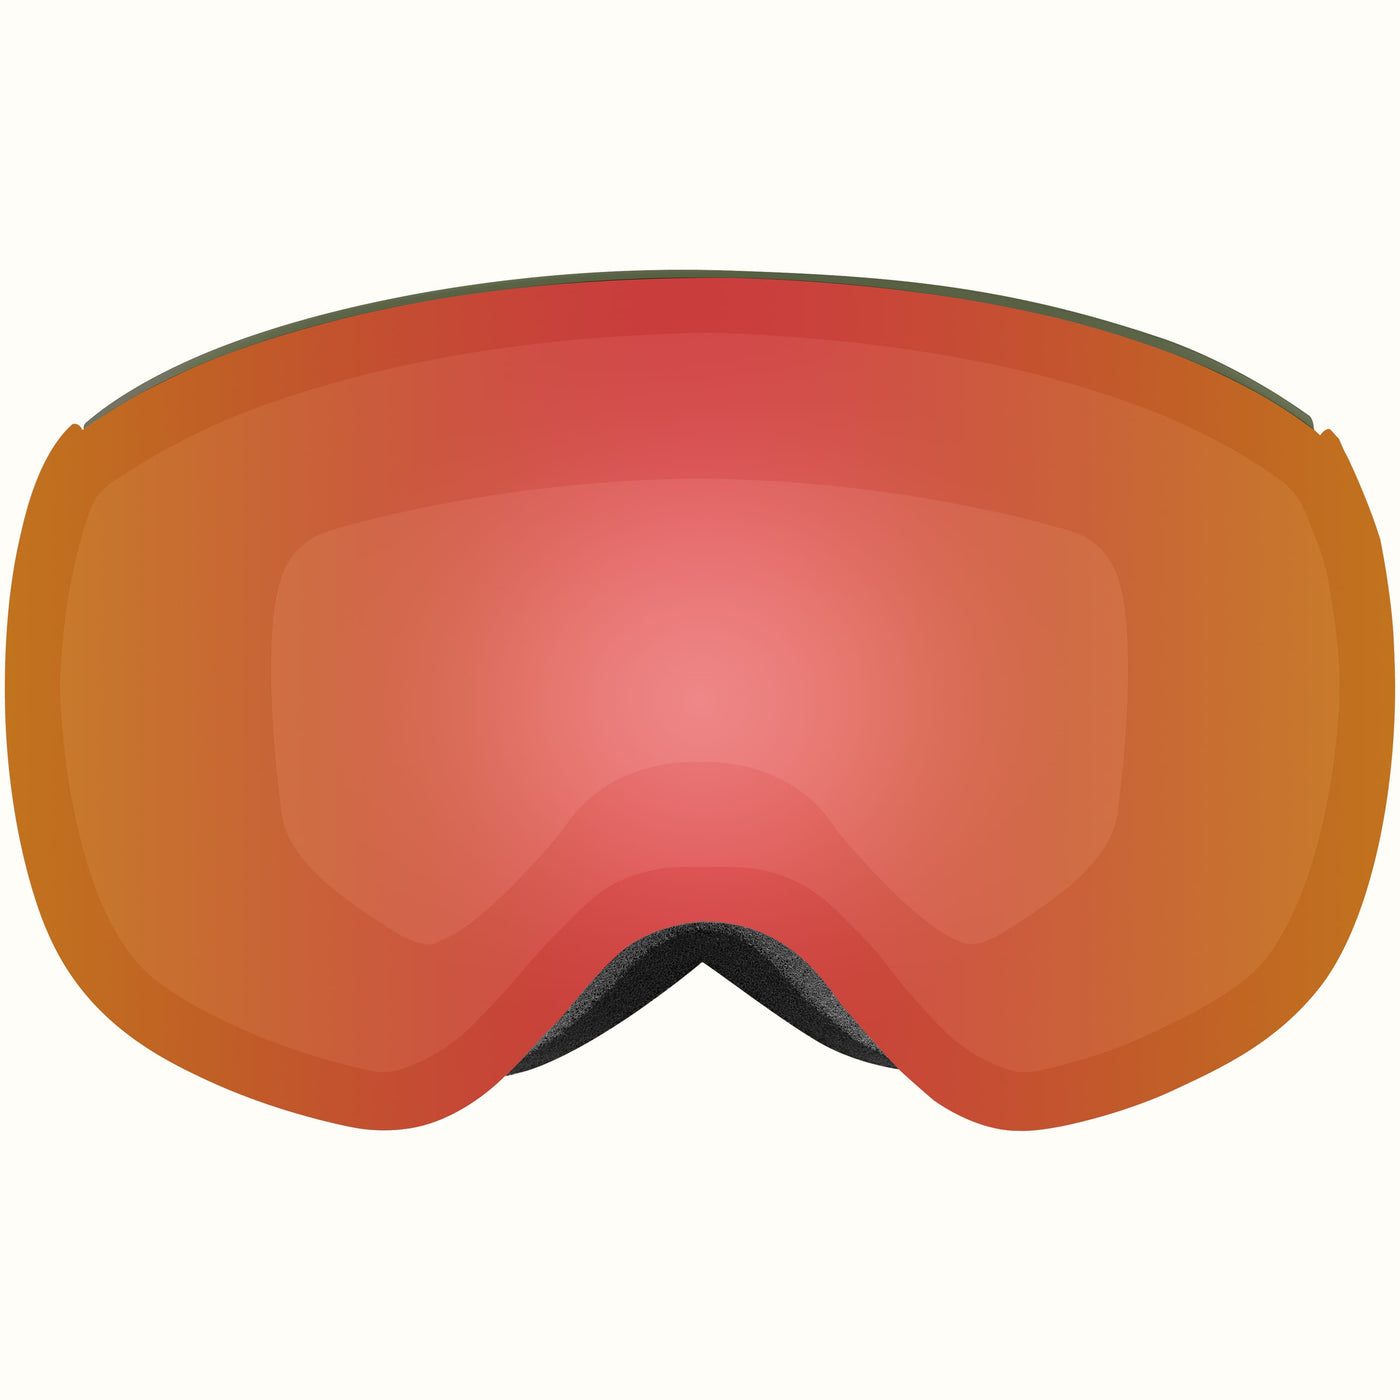 Traverse Plus Ski & Snowboard Goggles | Matte Forest and Jasper